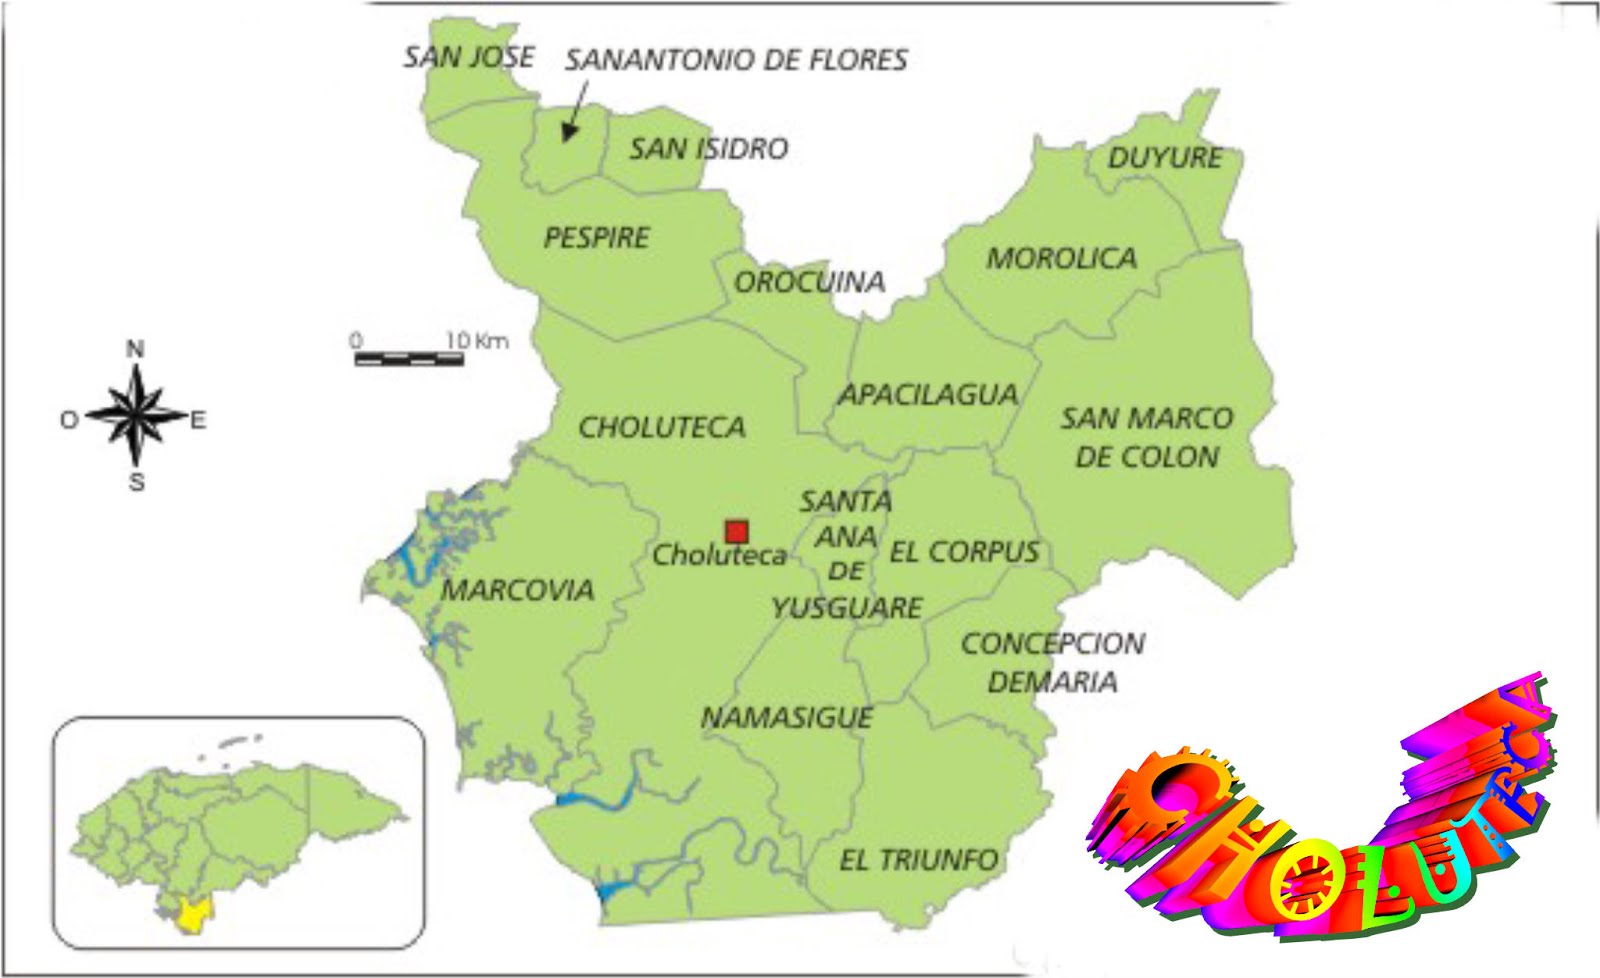 Mapa de Choluteca